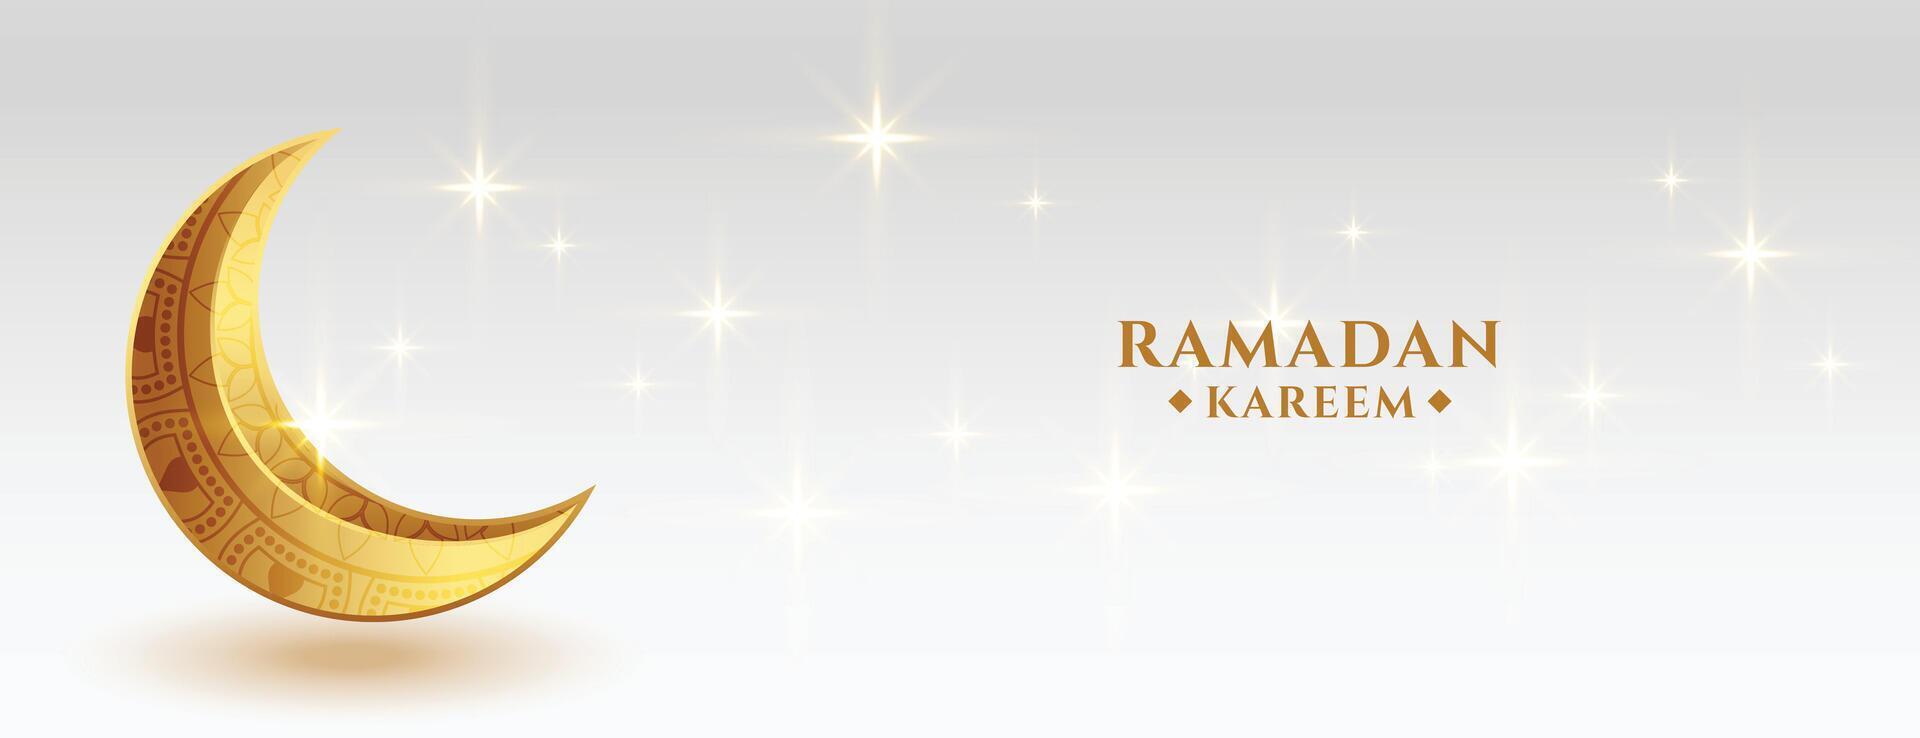 schön Ramadan kareem Festival Banner mit golden cresent Mond vektor